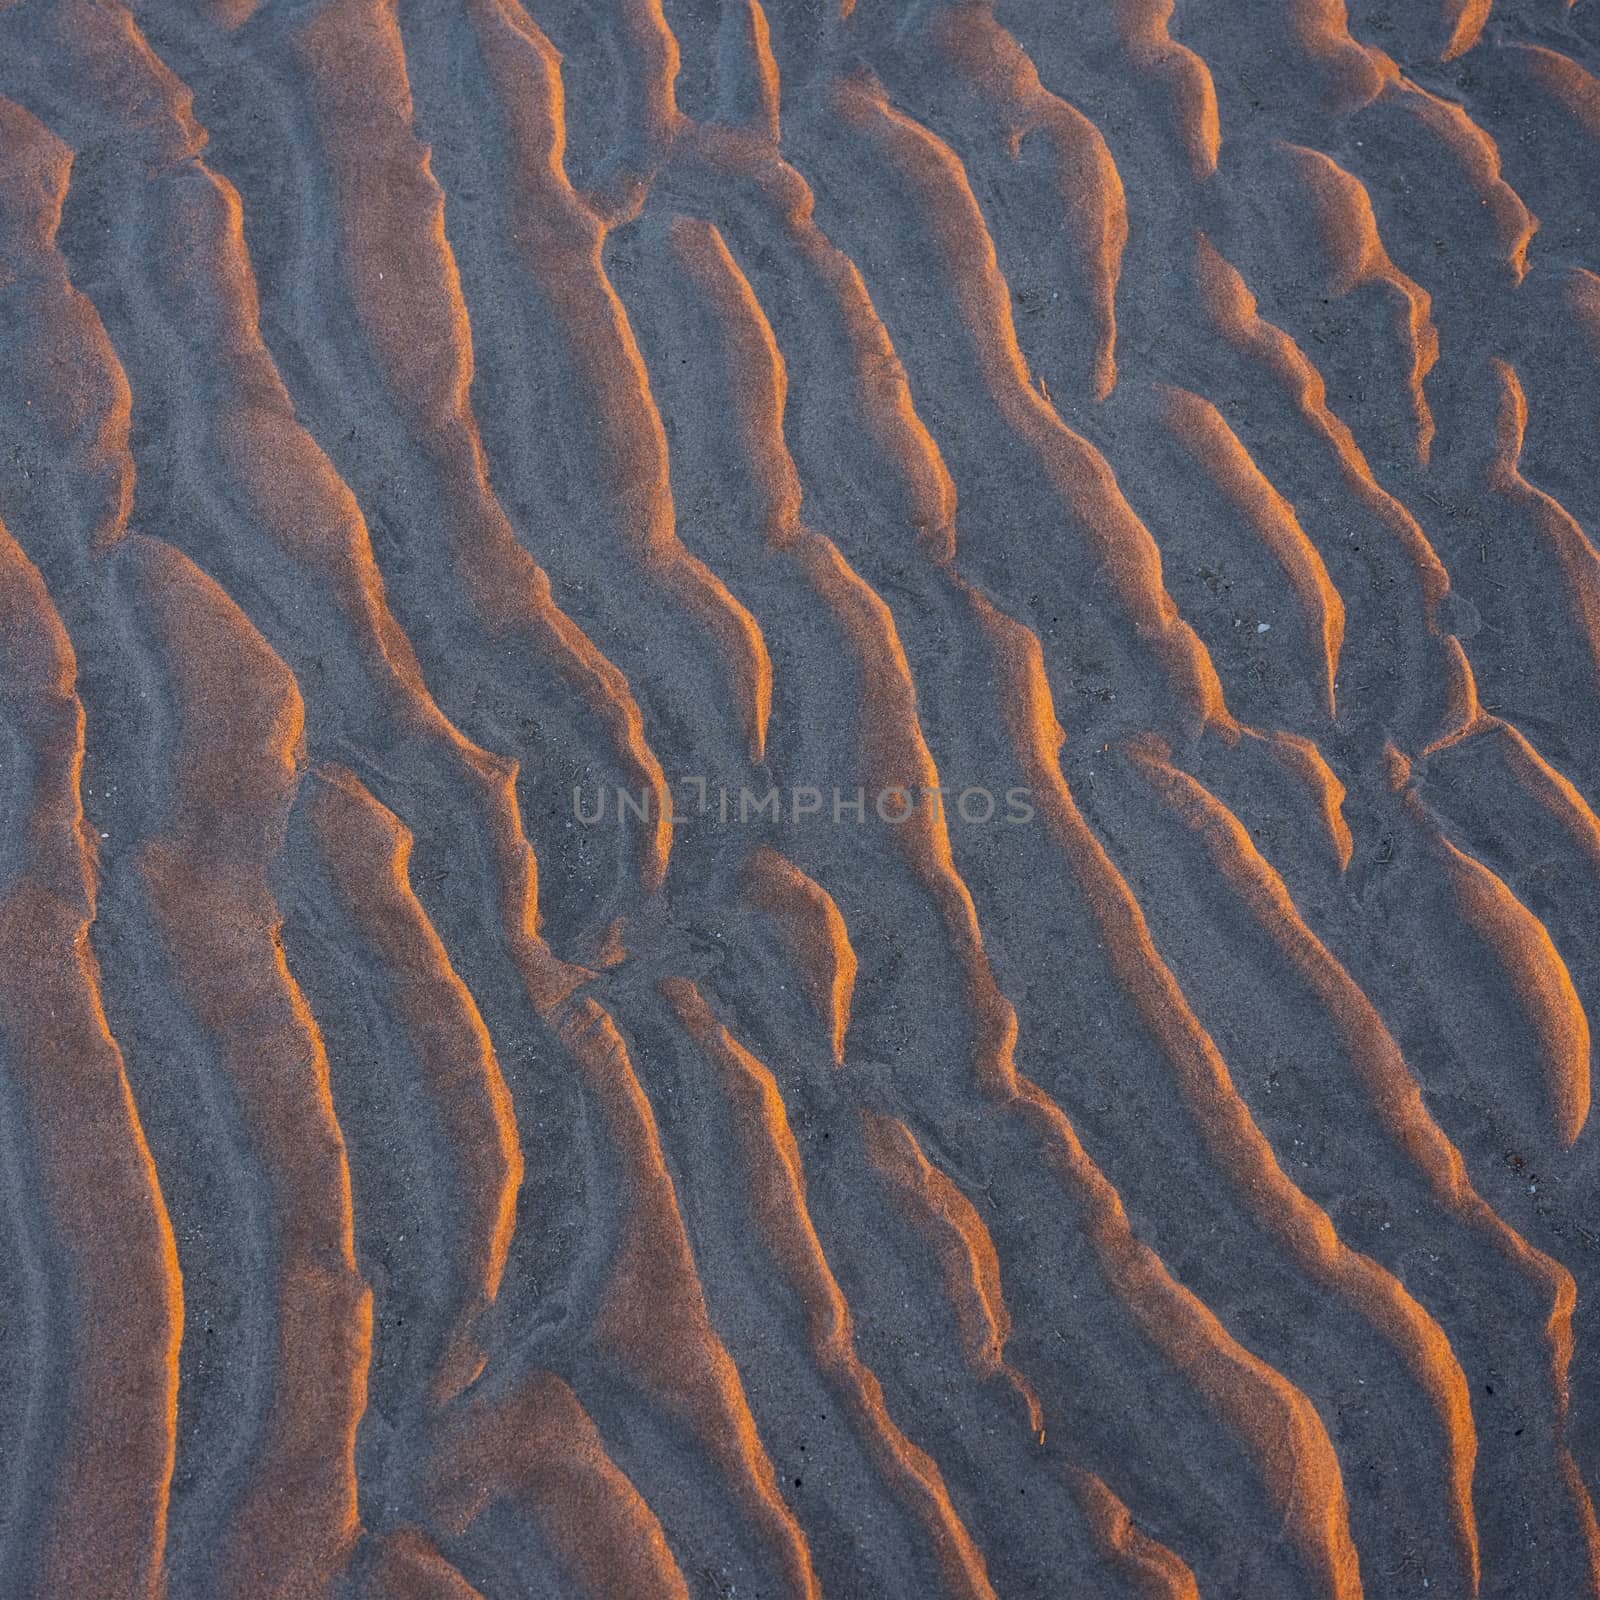 sand ripples on beach in warm light of setting sun by ahavelaar